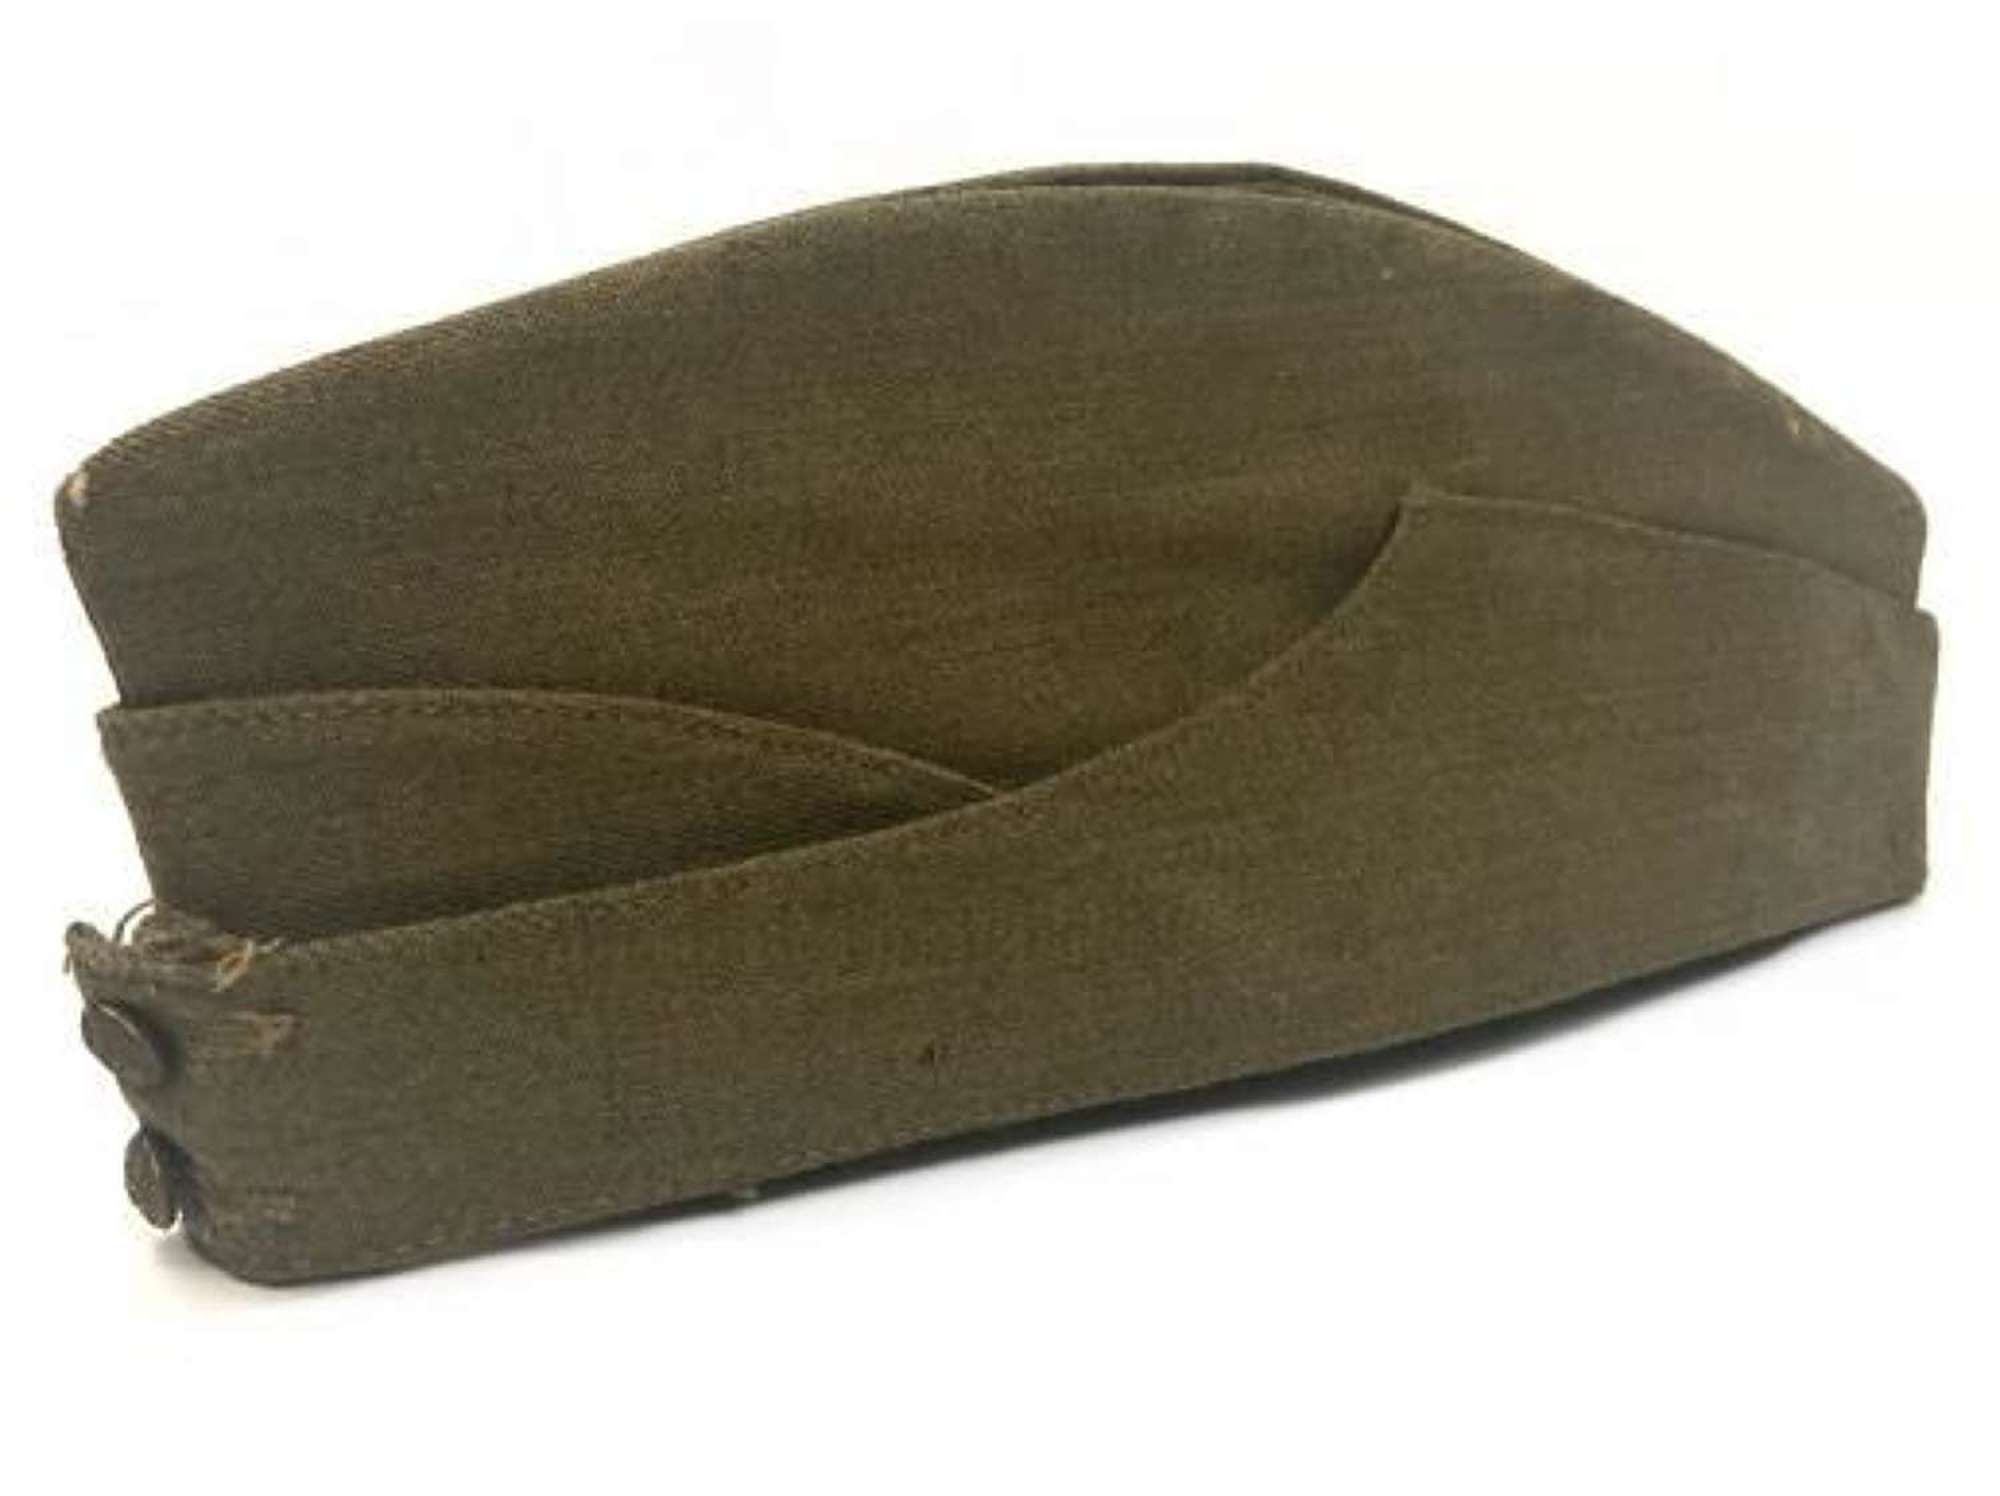 Original WW2 British Army Forage Cap - Size 7 1/2